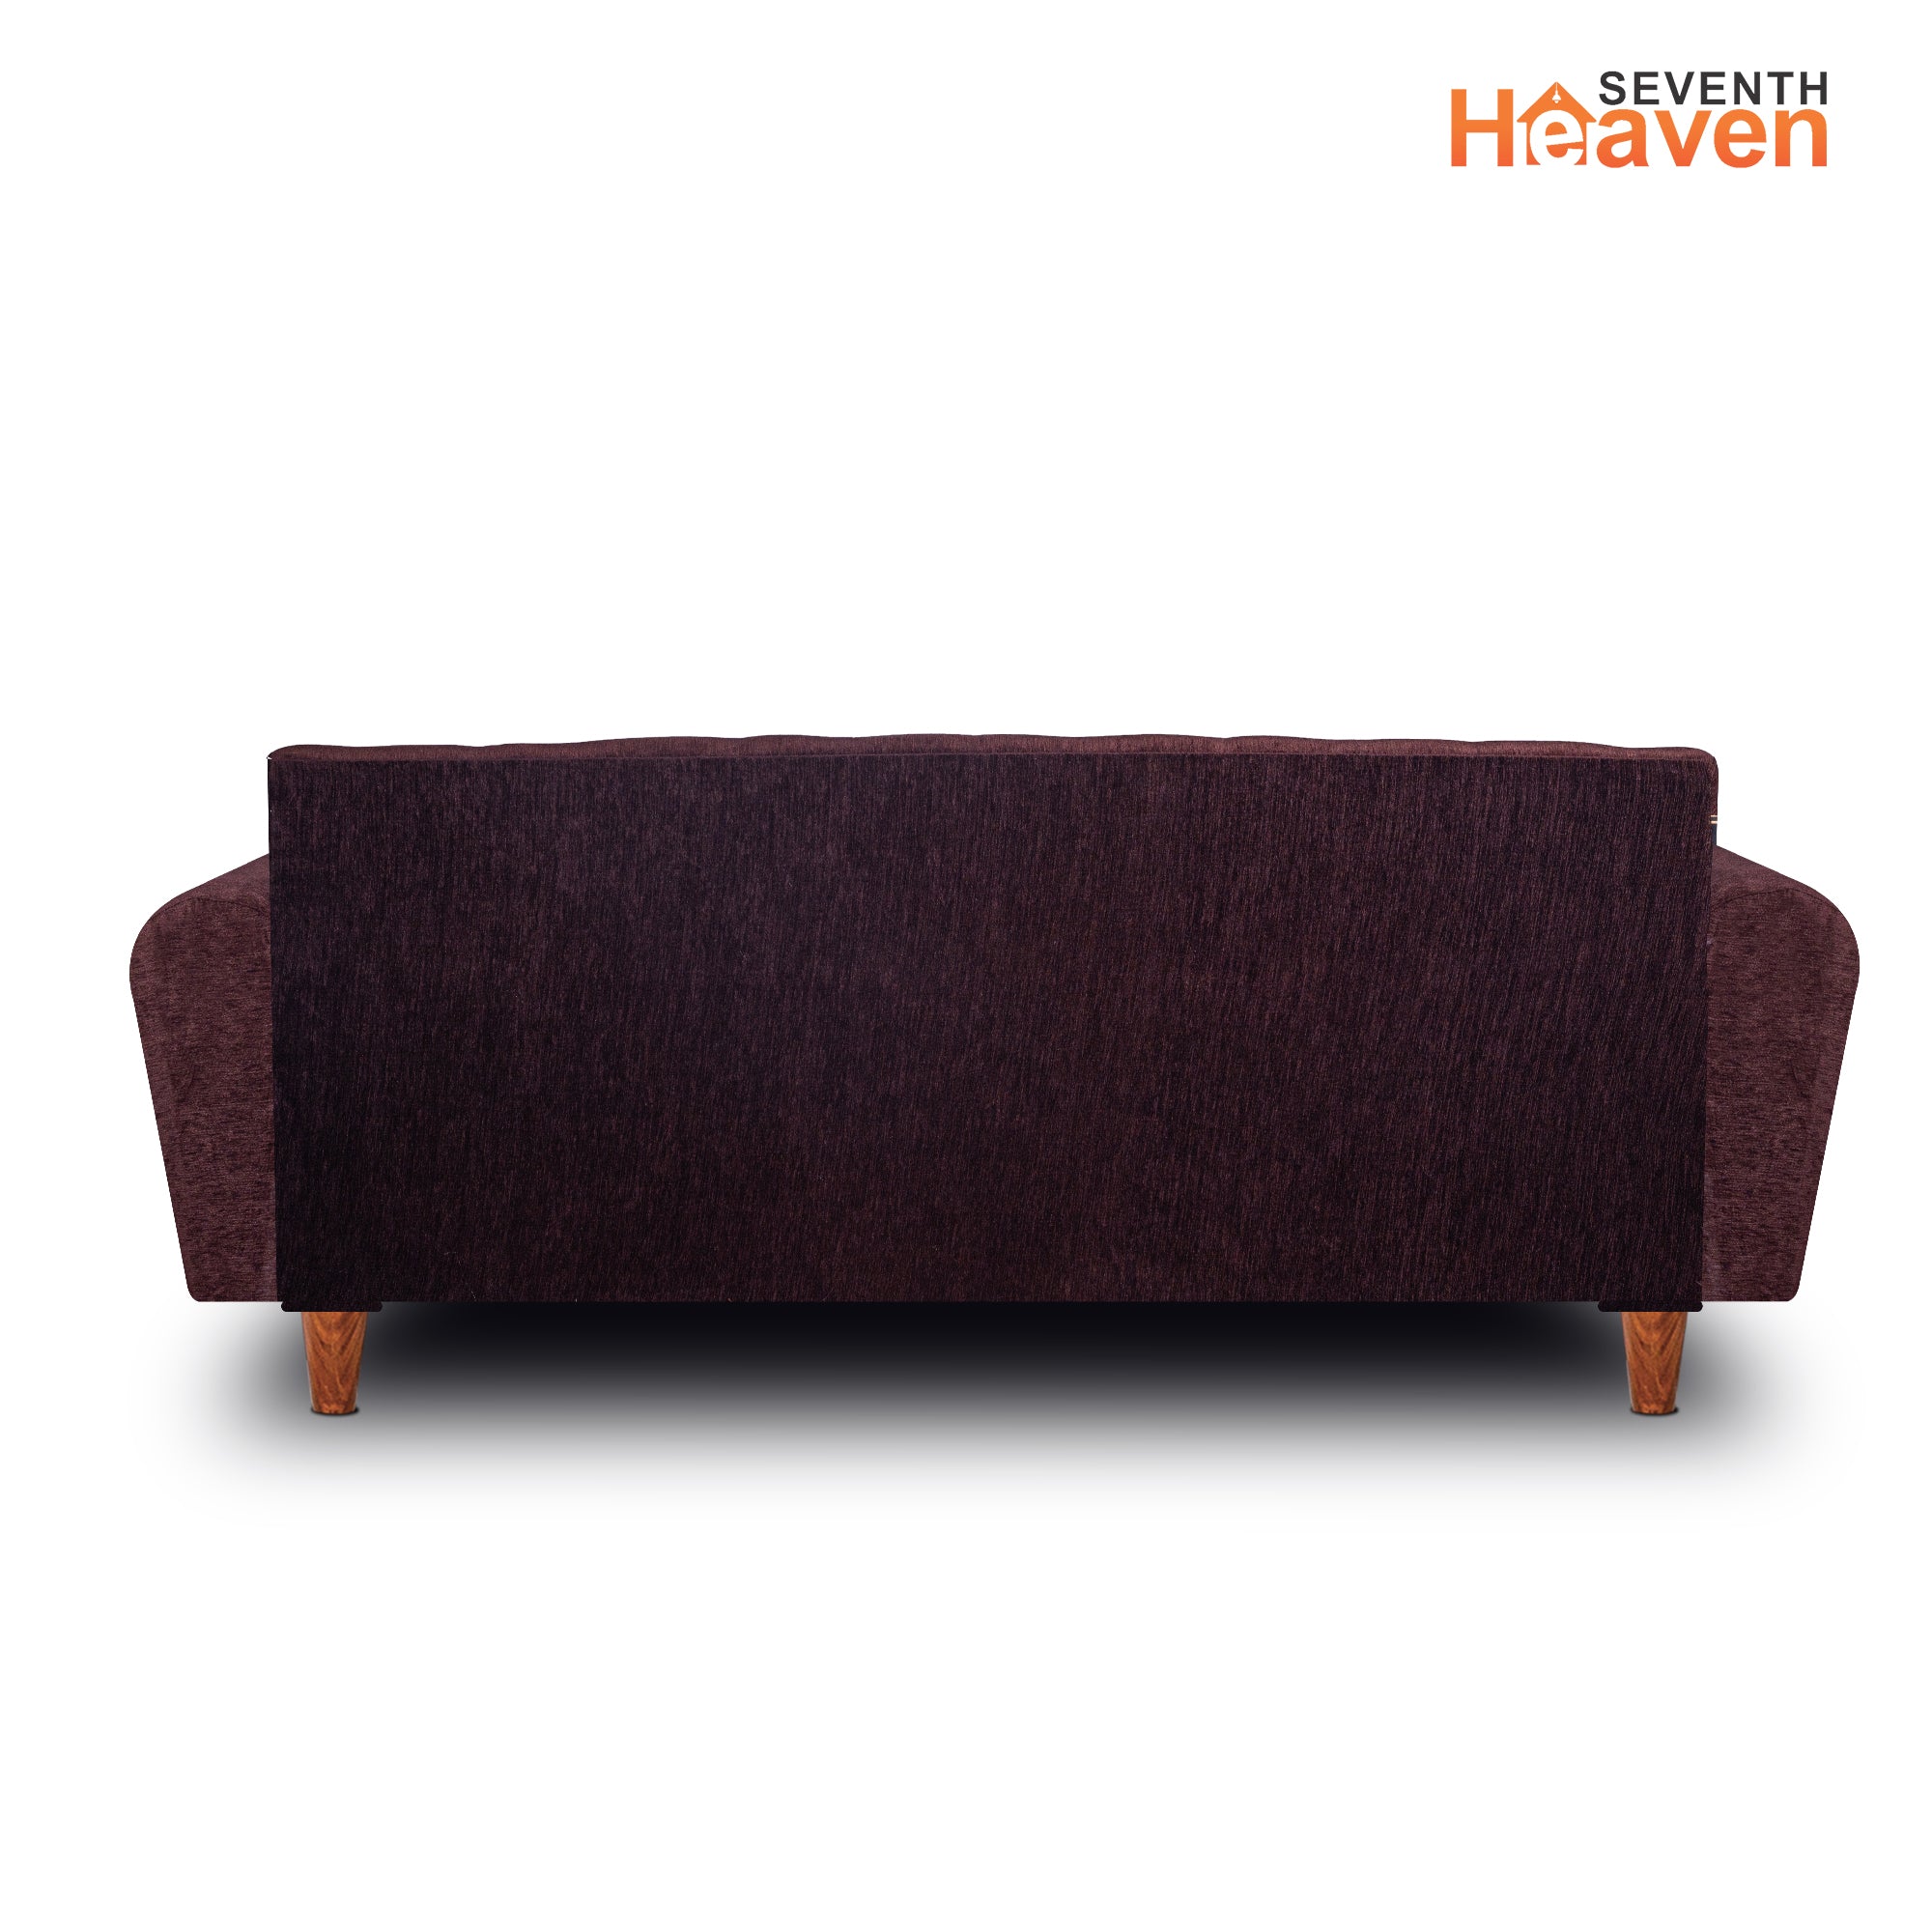 Seventh Heaven Milan 4 Seater Sofa with Ottoman, Chenille Molfino Fabric: 3 Year Warranty Fabric 4 Seater Sofa  (Finish Color - Brown, DIY(Do-It-Yourself))